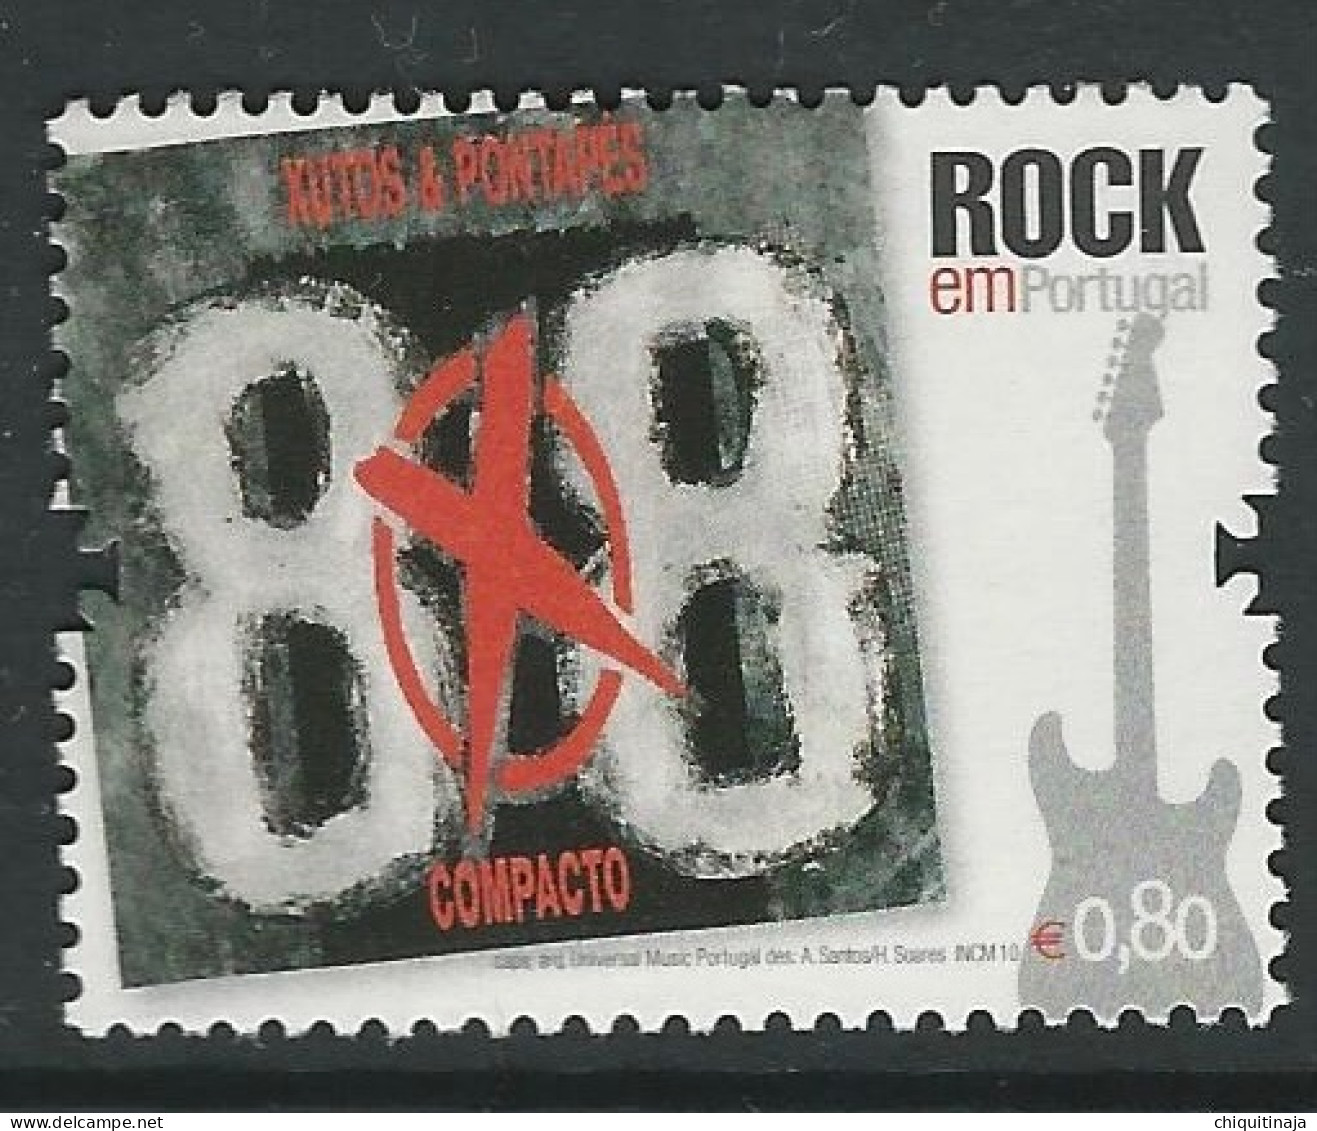 Portugal 2010 “Rock” MNH/** - Nuovi